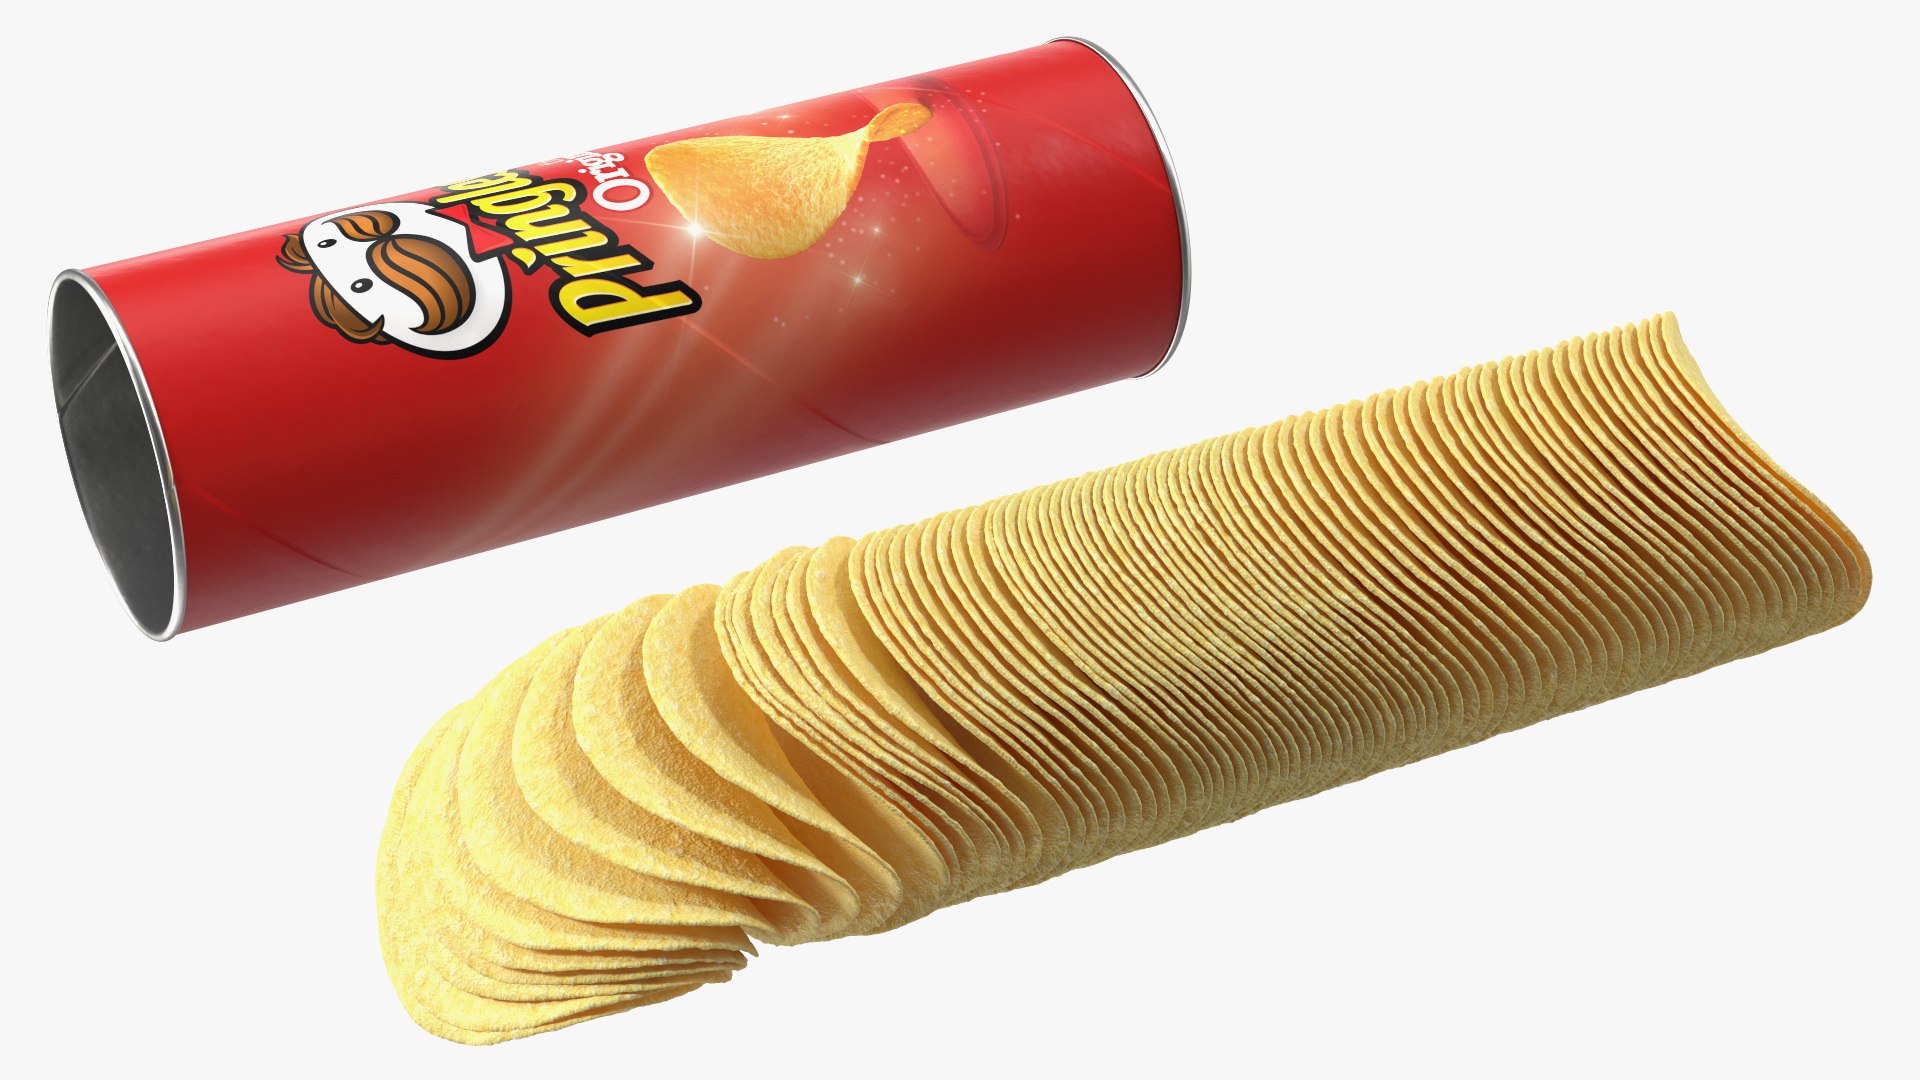 3D model Opened Tube of Pringles Original Potato Chips - TurboSquid 1747734